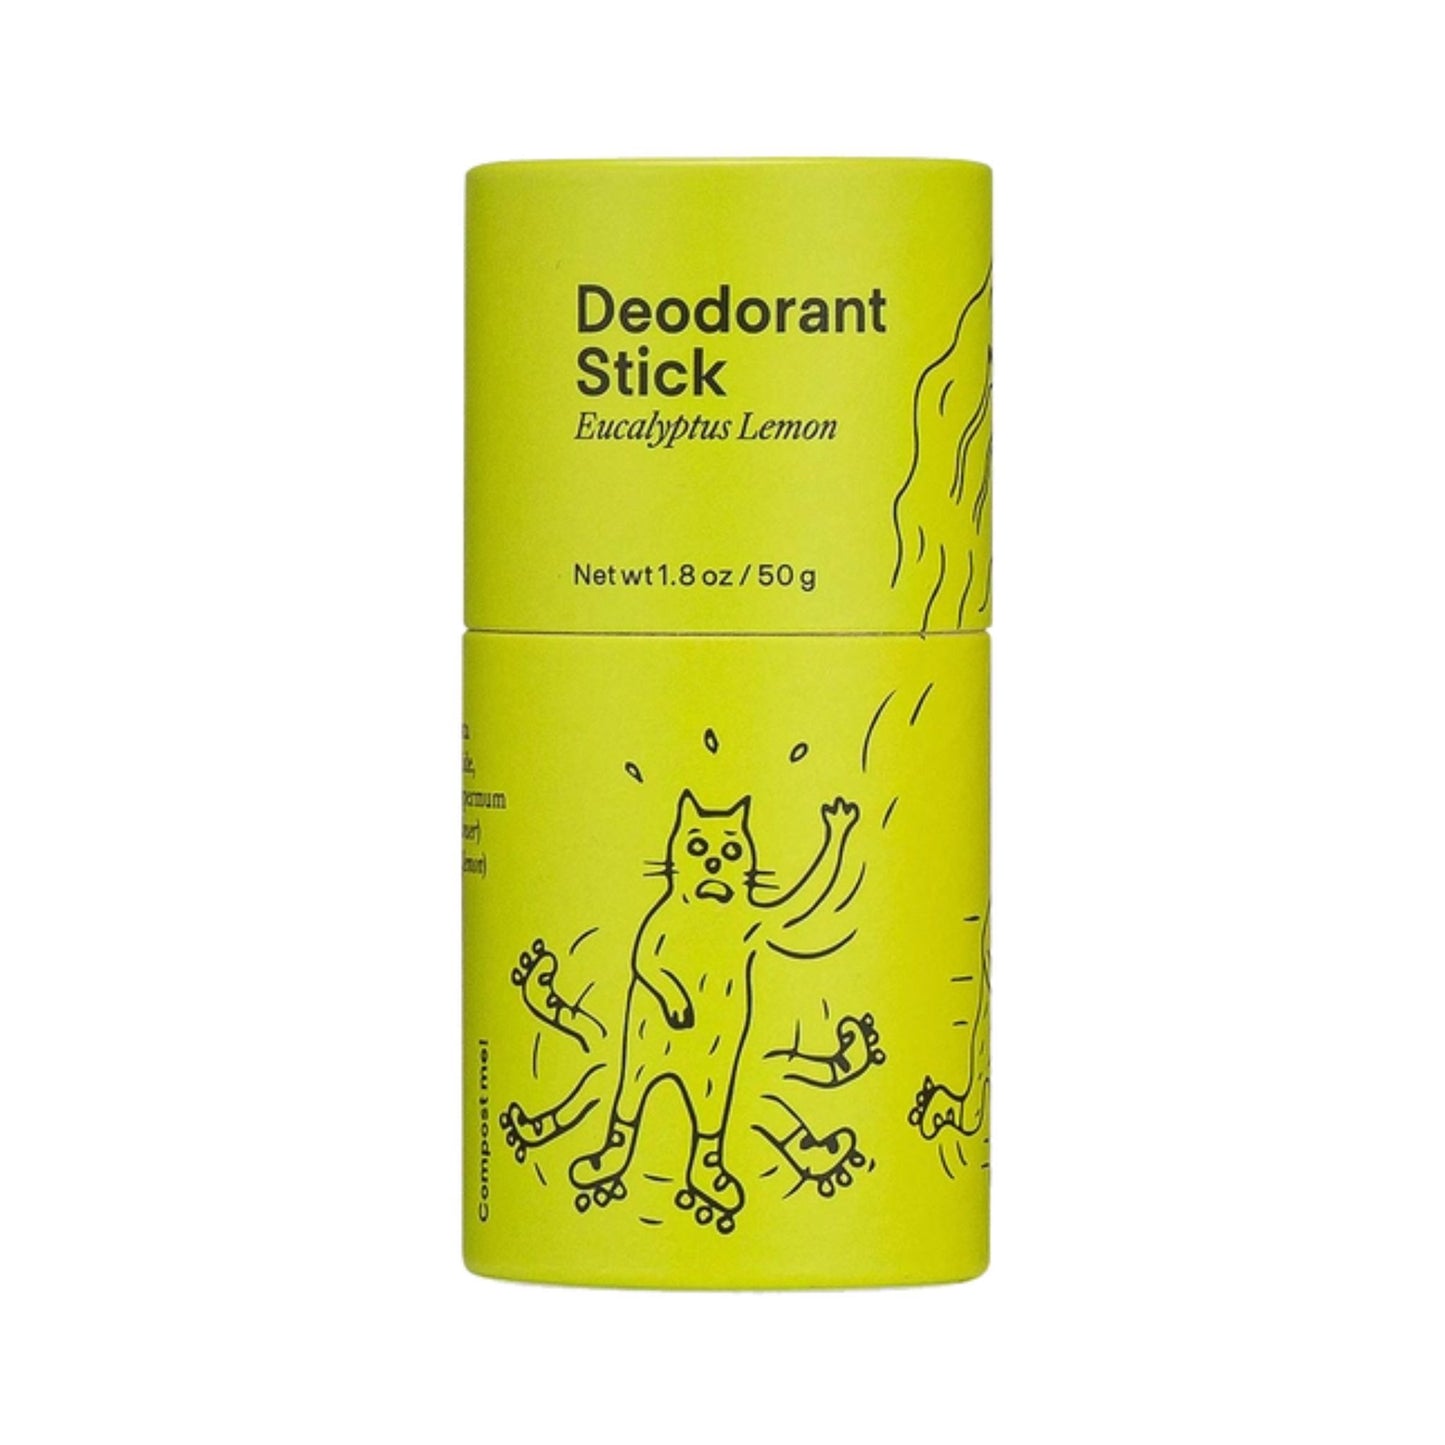 A natural deodorant stick in a biodegradable package. Scents: Eucalyptus Lemon Deodorant Stick. 1.8 oz.